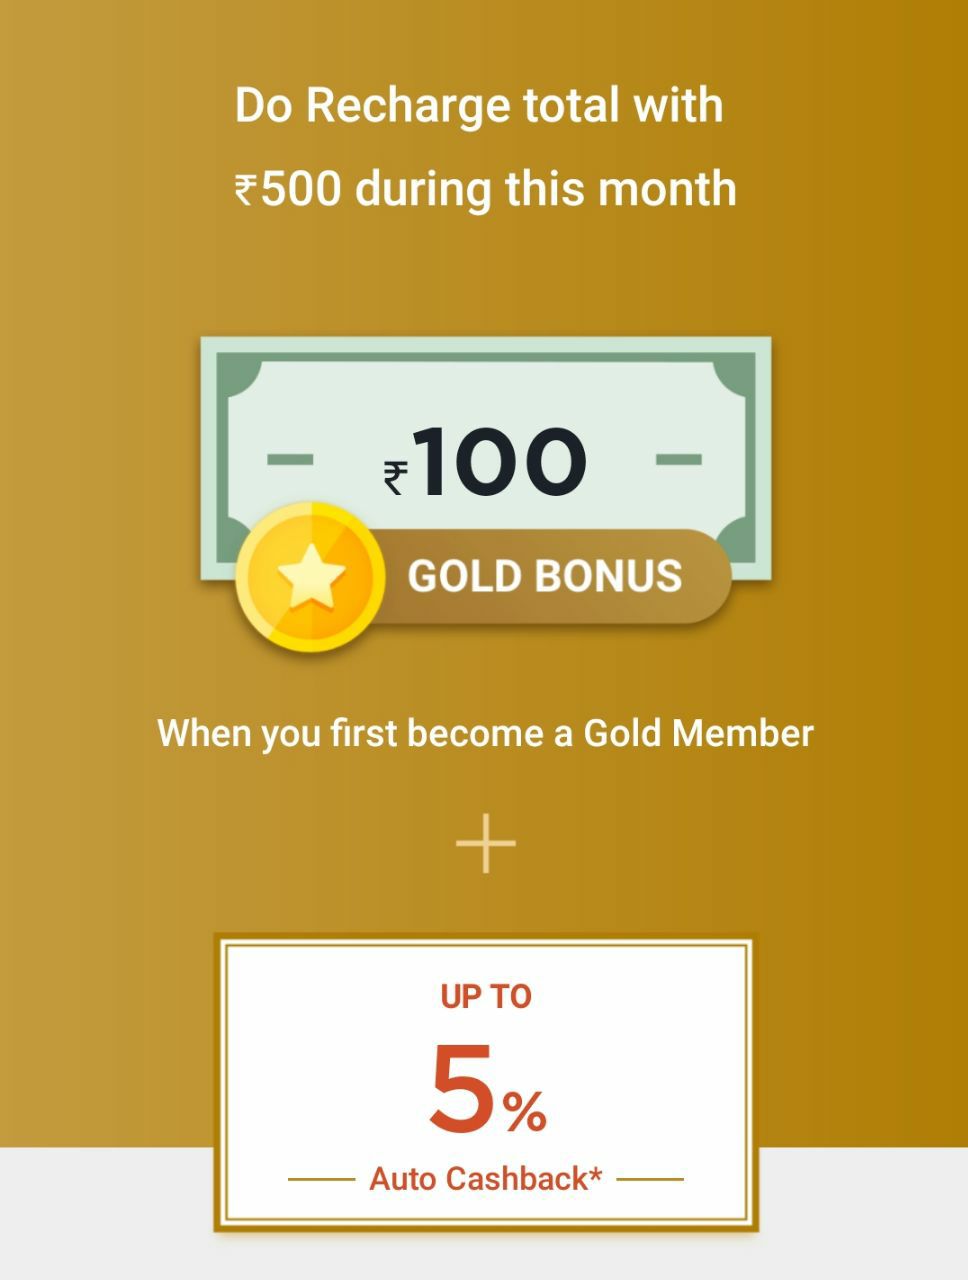 TrueBalance App- Get ₹100 Cashback On ₹500 Recharge+5% Extra